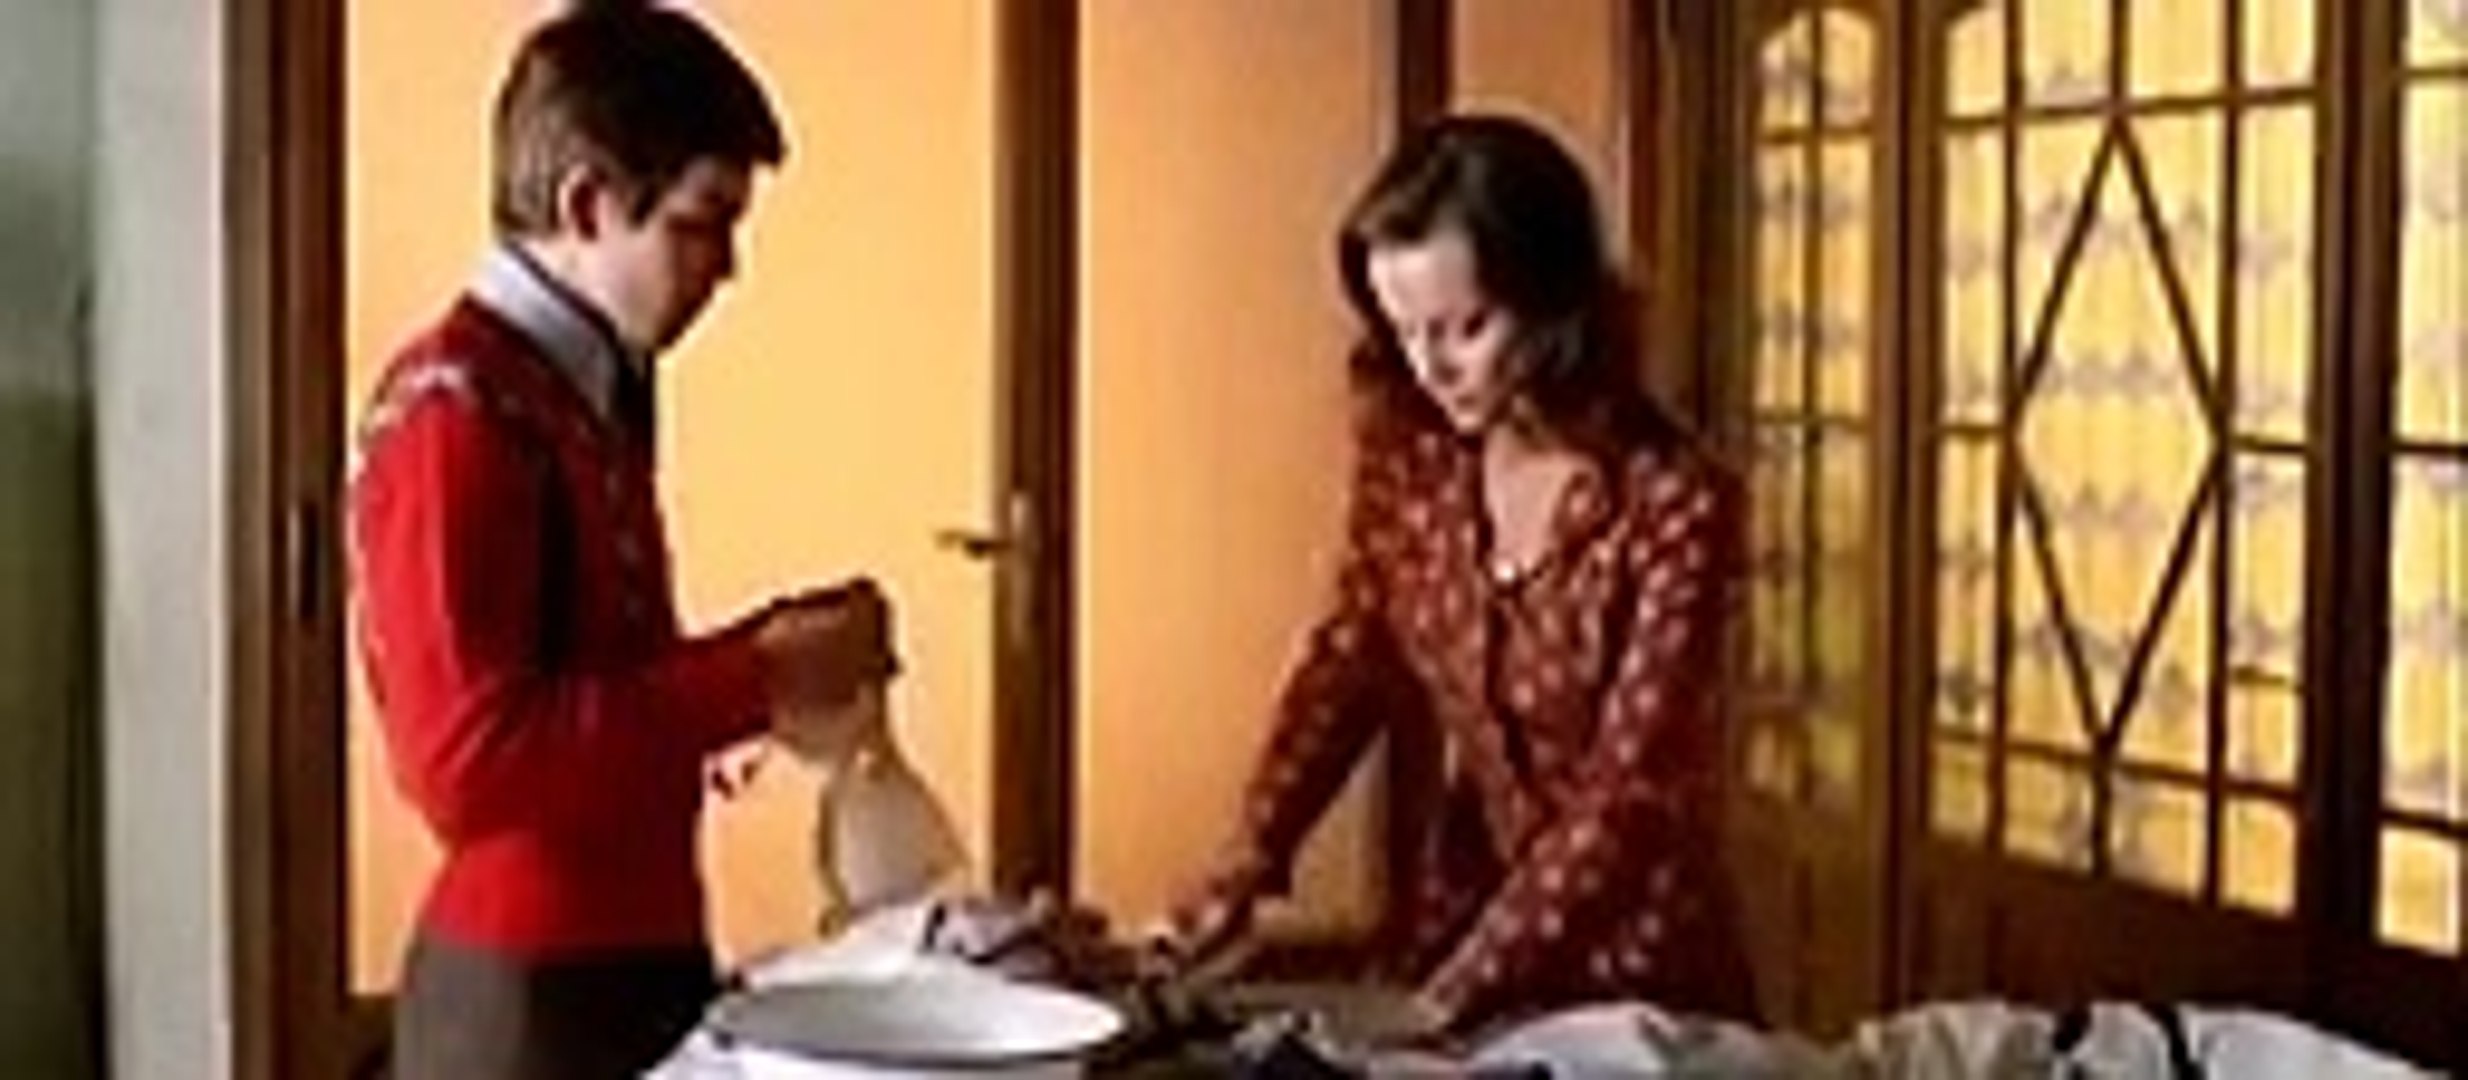 Мачеха научит пасынку. Малиция / коварство / Malizia (1973). Исчезновение.2o17 драма.